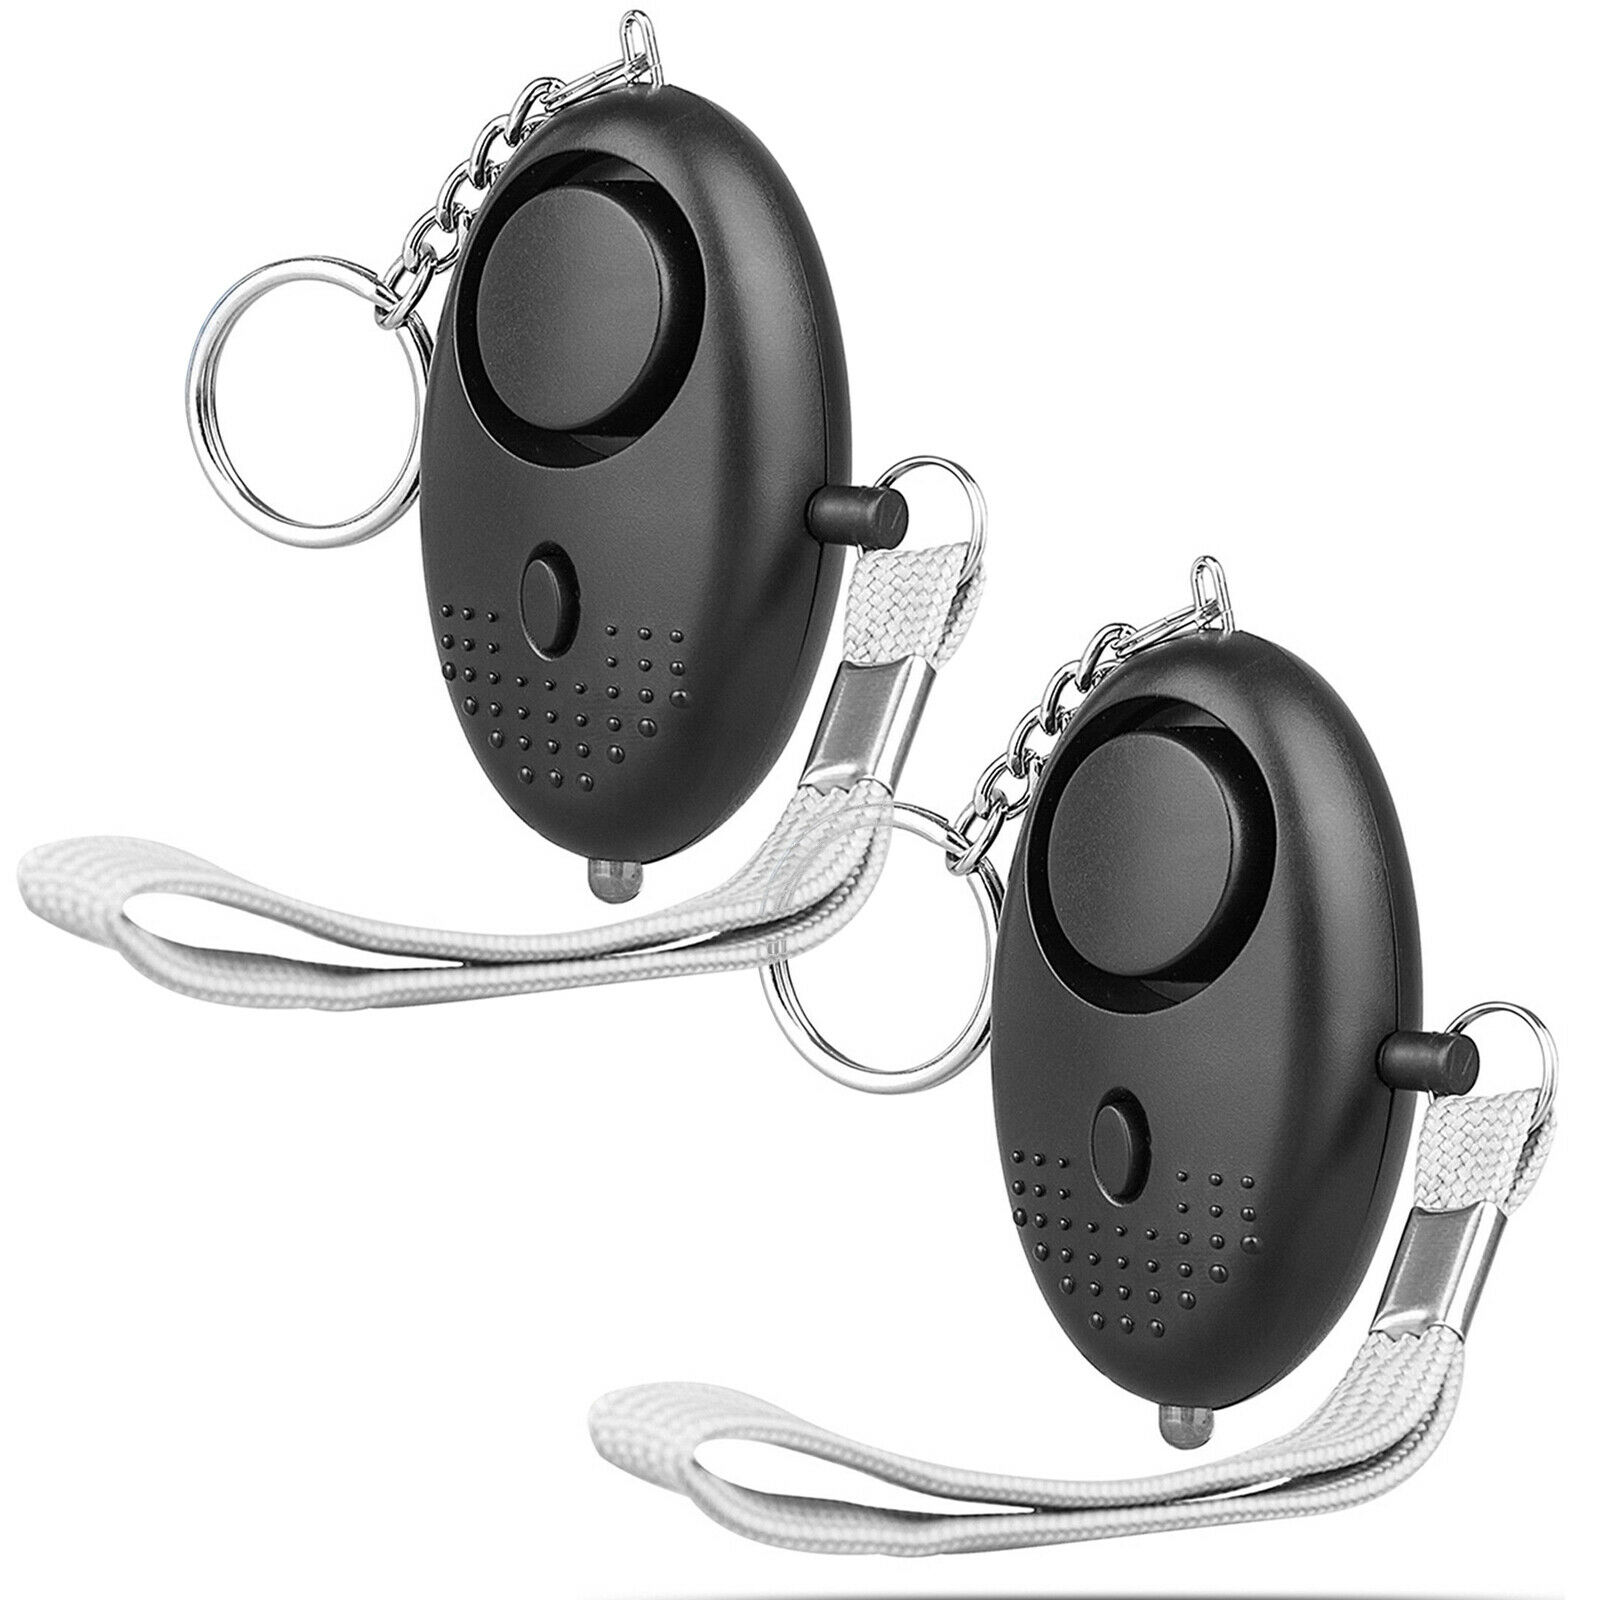 35pcs Personal Safe Alarm Sound Keychain 140db Emergency Women Safety Led Light Ebay 0185